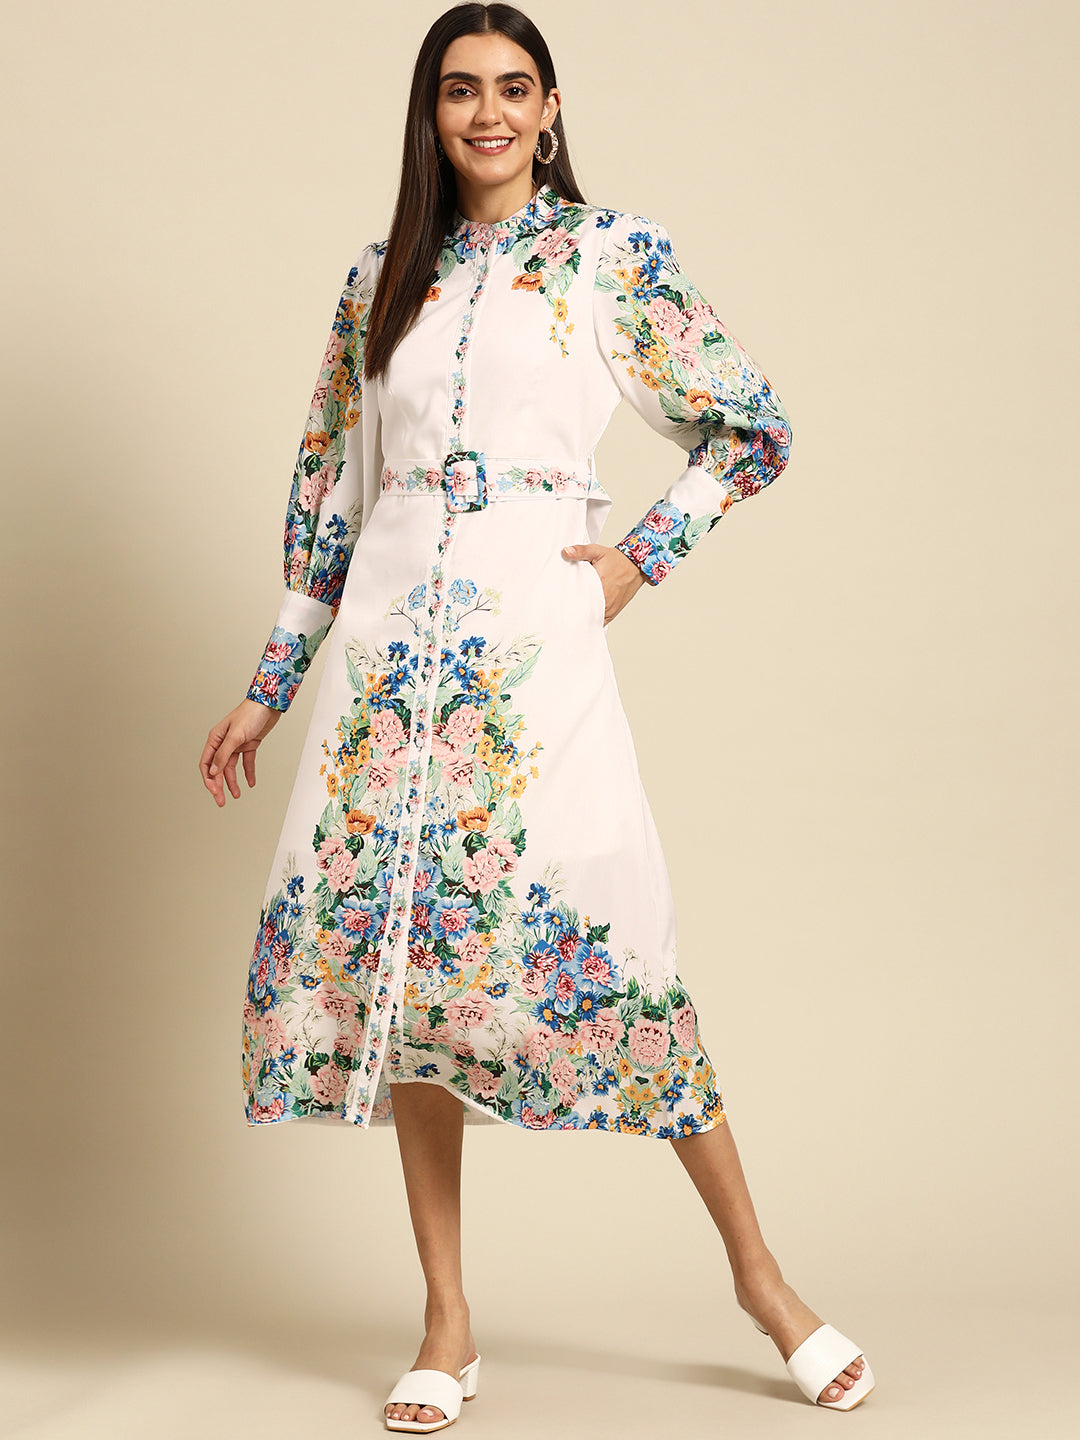 Flower Print Plus Size Dresses | Chic Lover - Plus Size Clothing